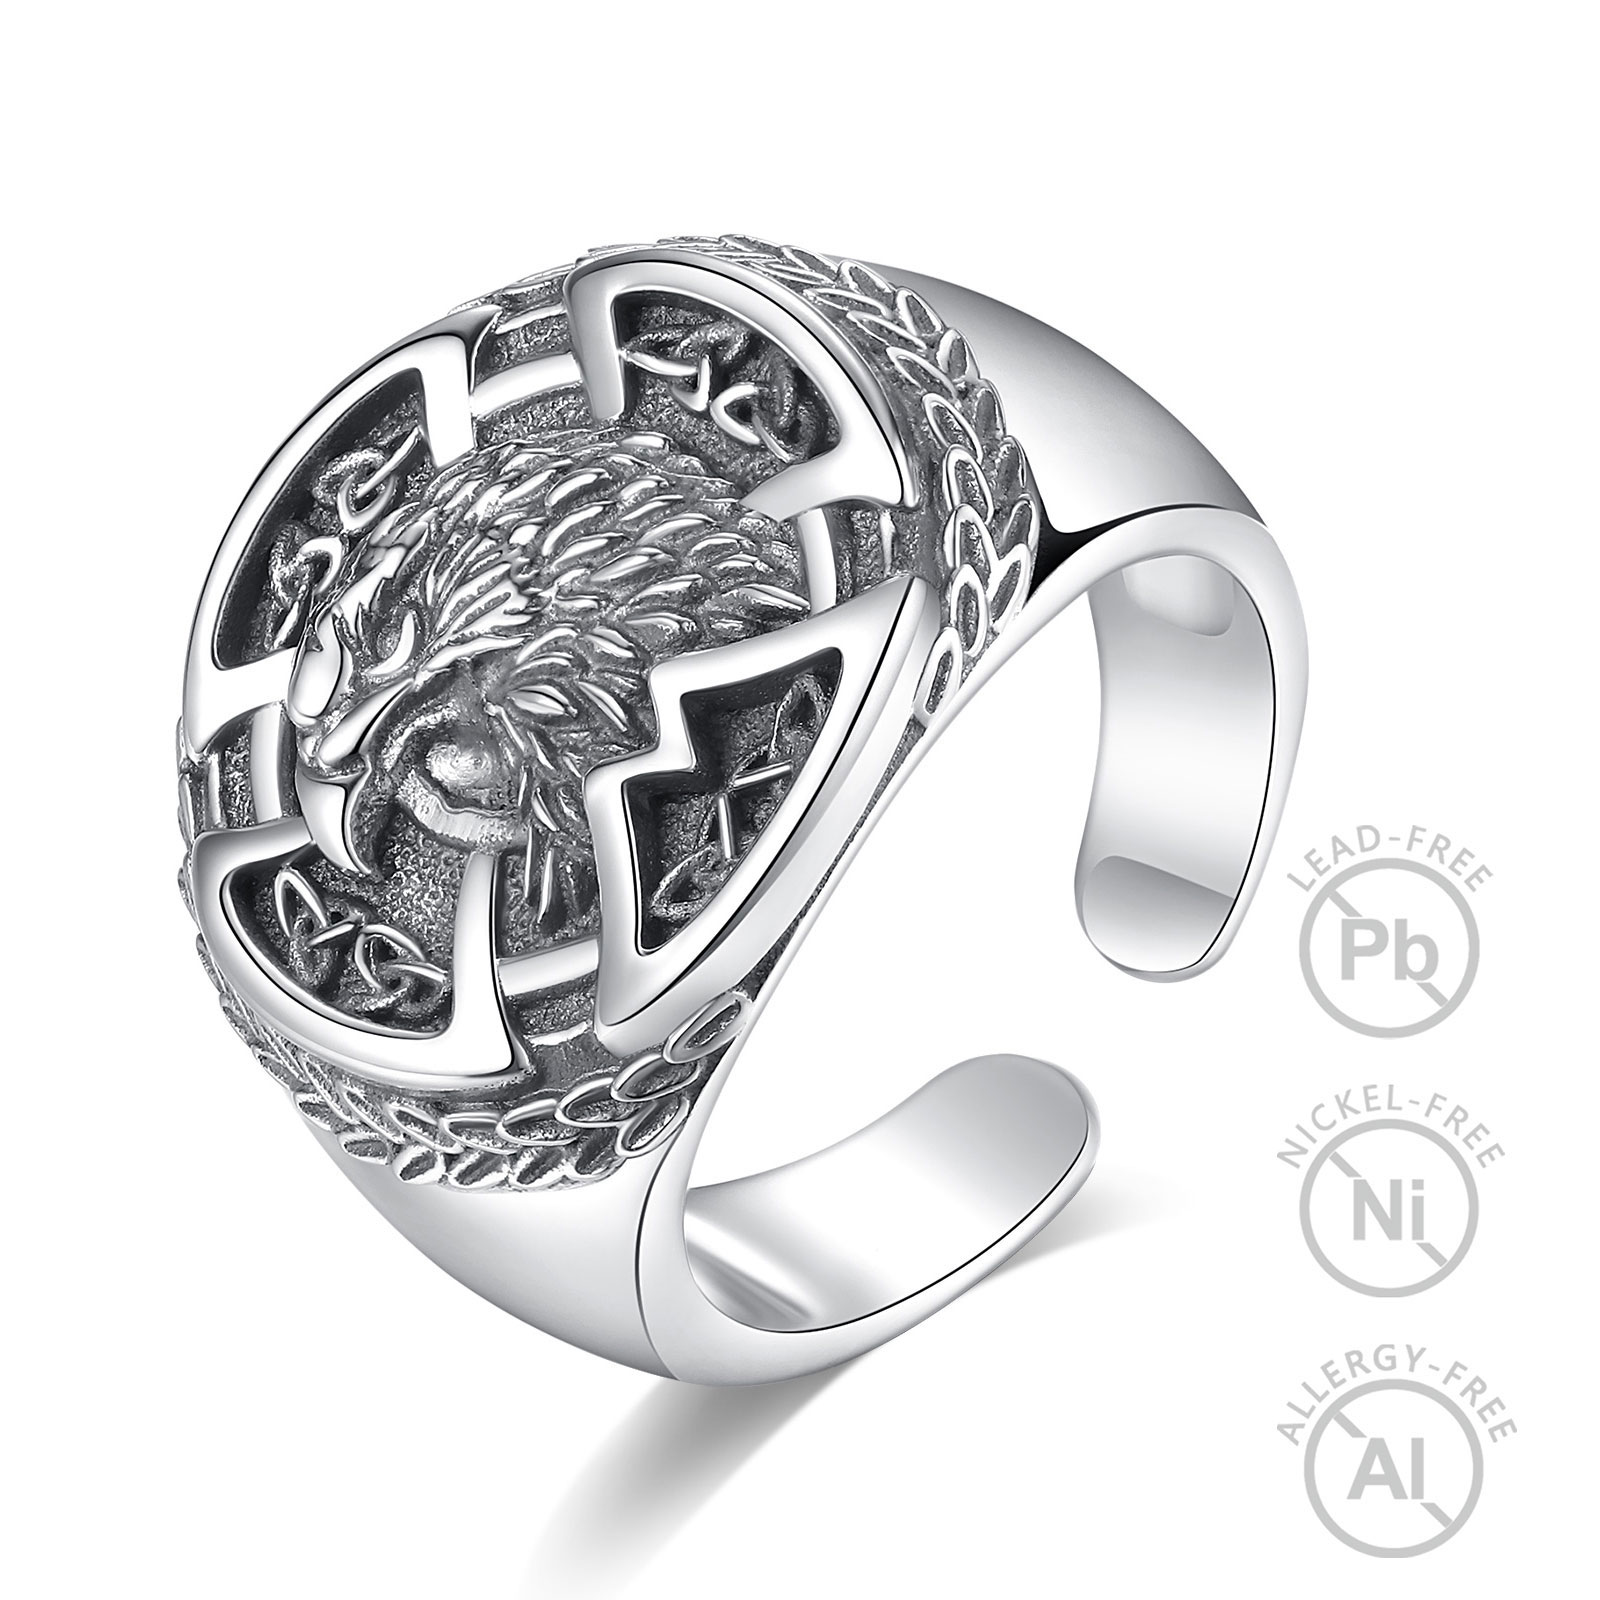 Merryshine Jewelry S925 Sterling Silver Vintage Embossment Viking Eagles Design Open Ring for Men